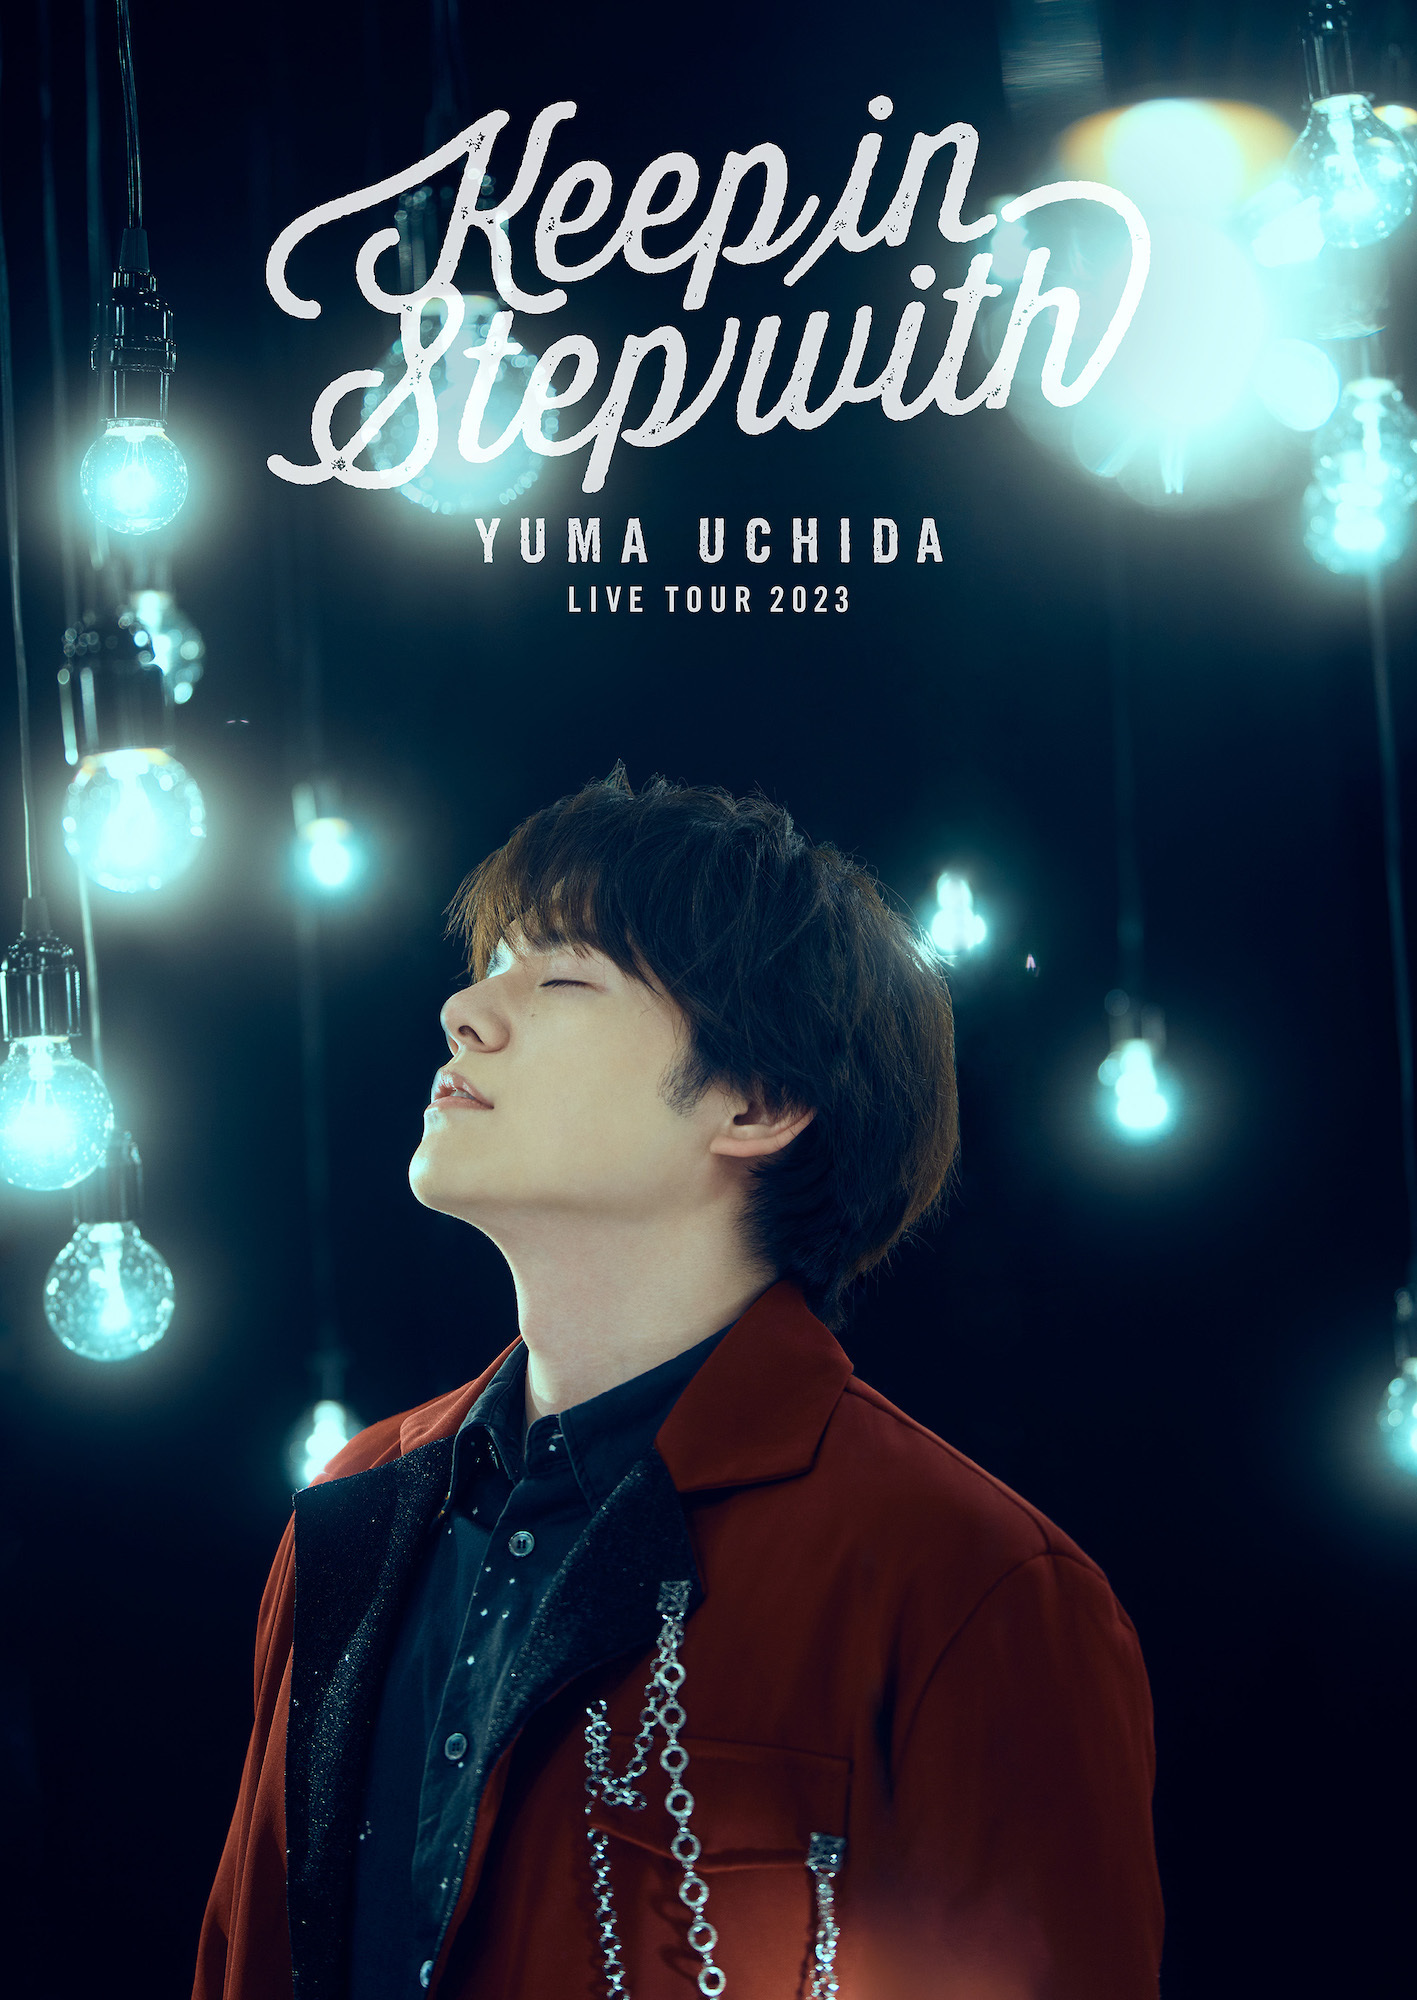 YUMA UCHIDA LIVE TOUR 2023 「Keep in Step with」DVDジャケット